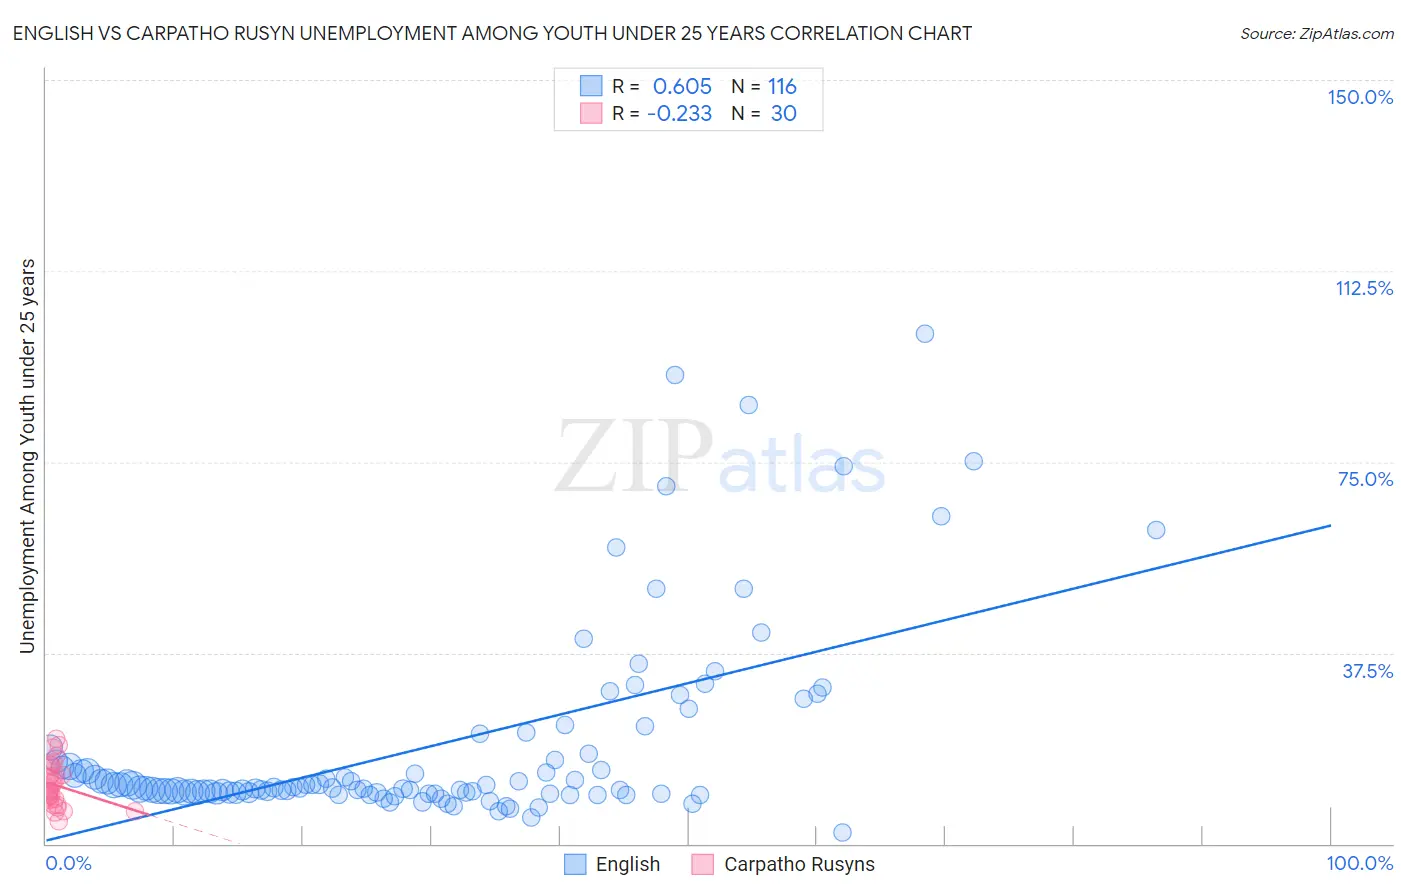 English vs Carpatho Rusyn Unemployment Among Youth under 25 years